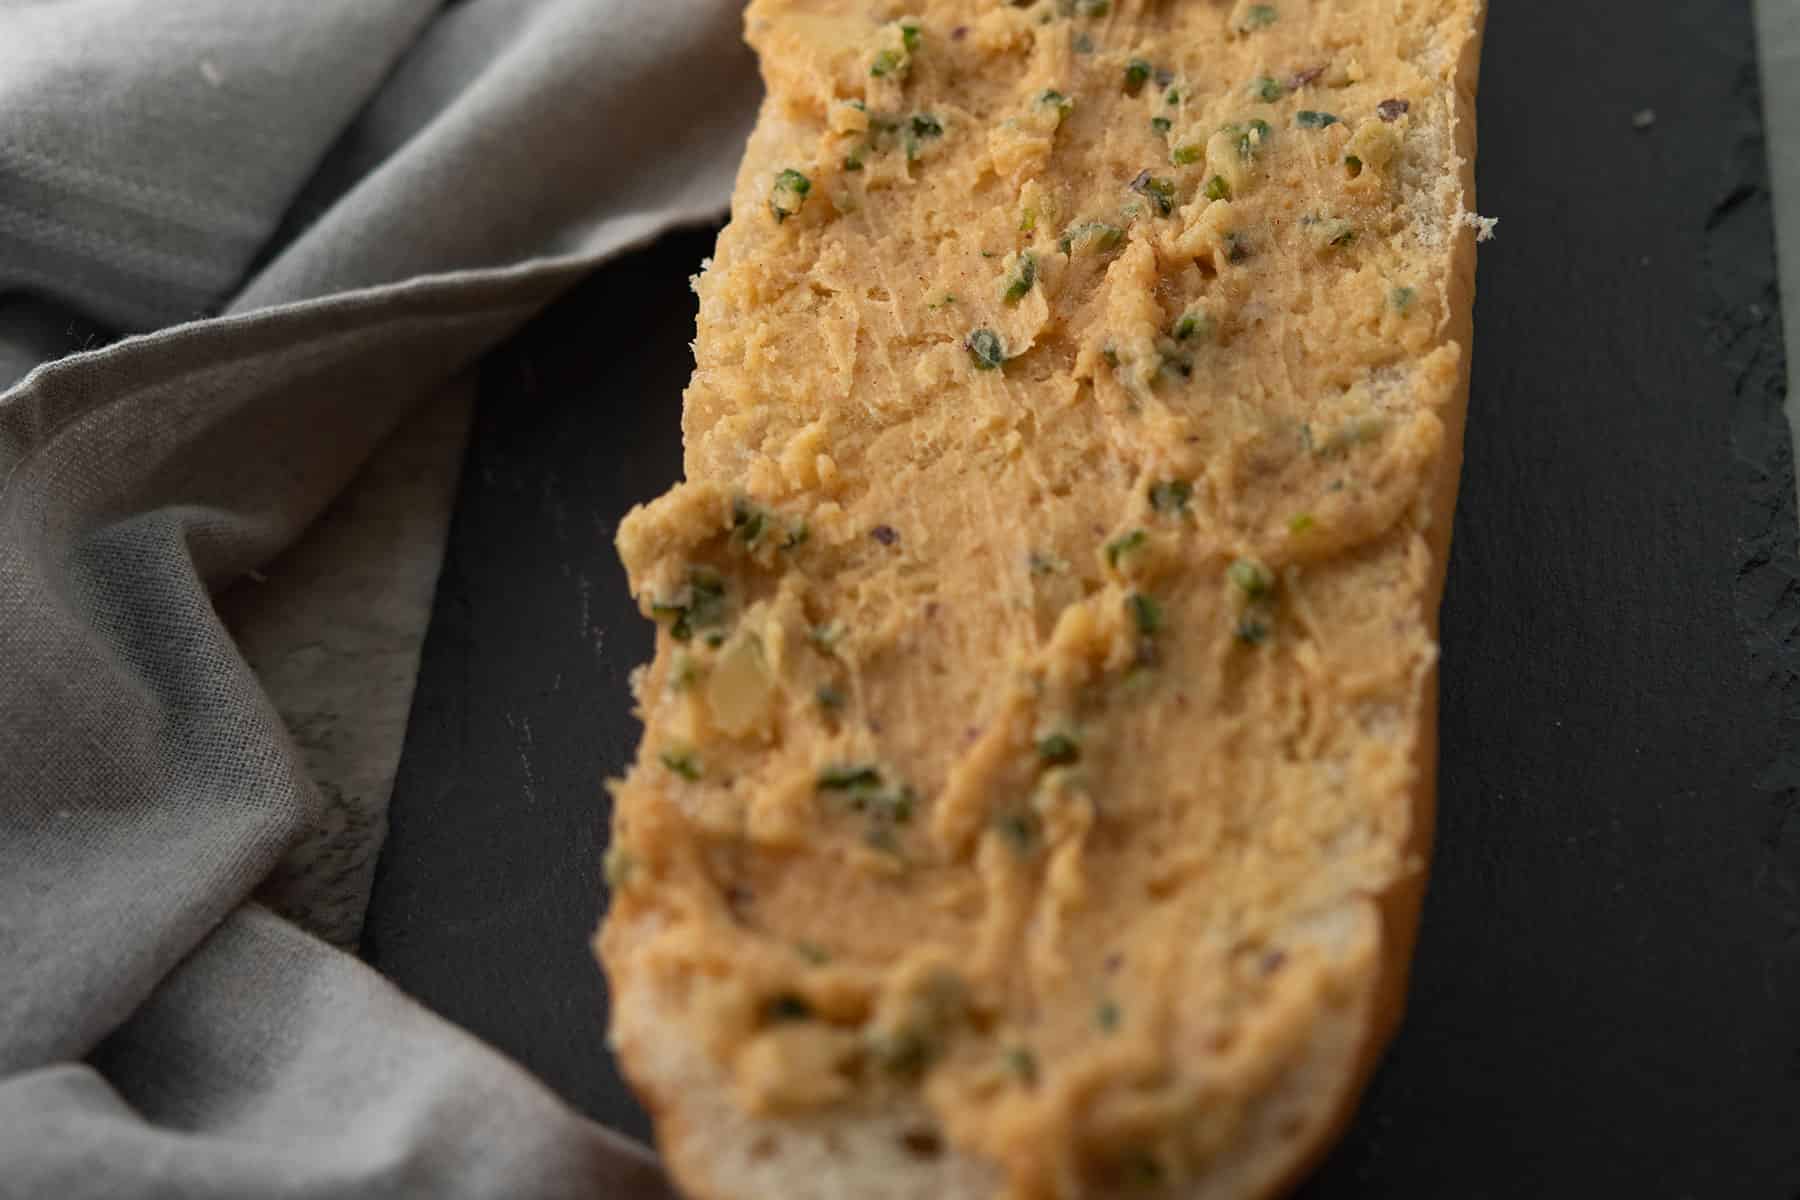 butter spread over the bread